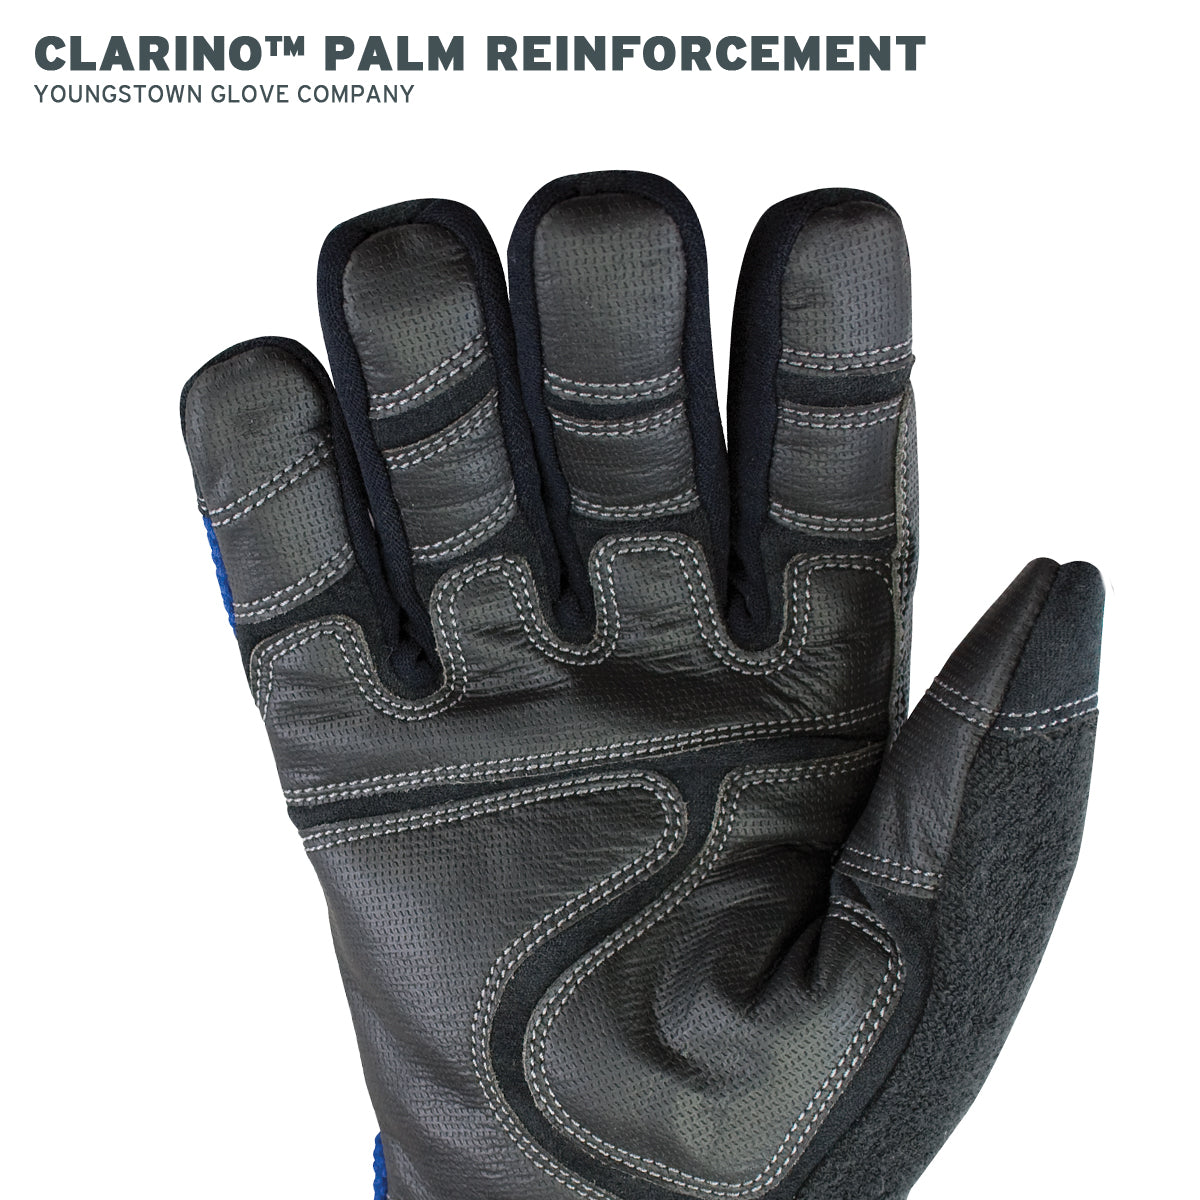 Cut Resistant Waterproof Winter Plus - Youngstown Glove